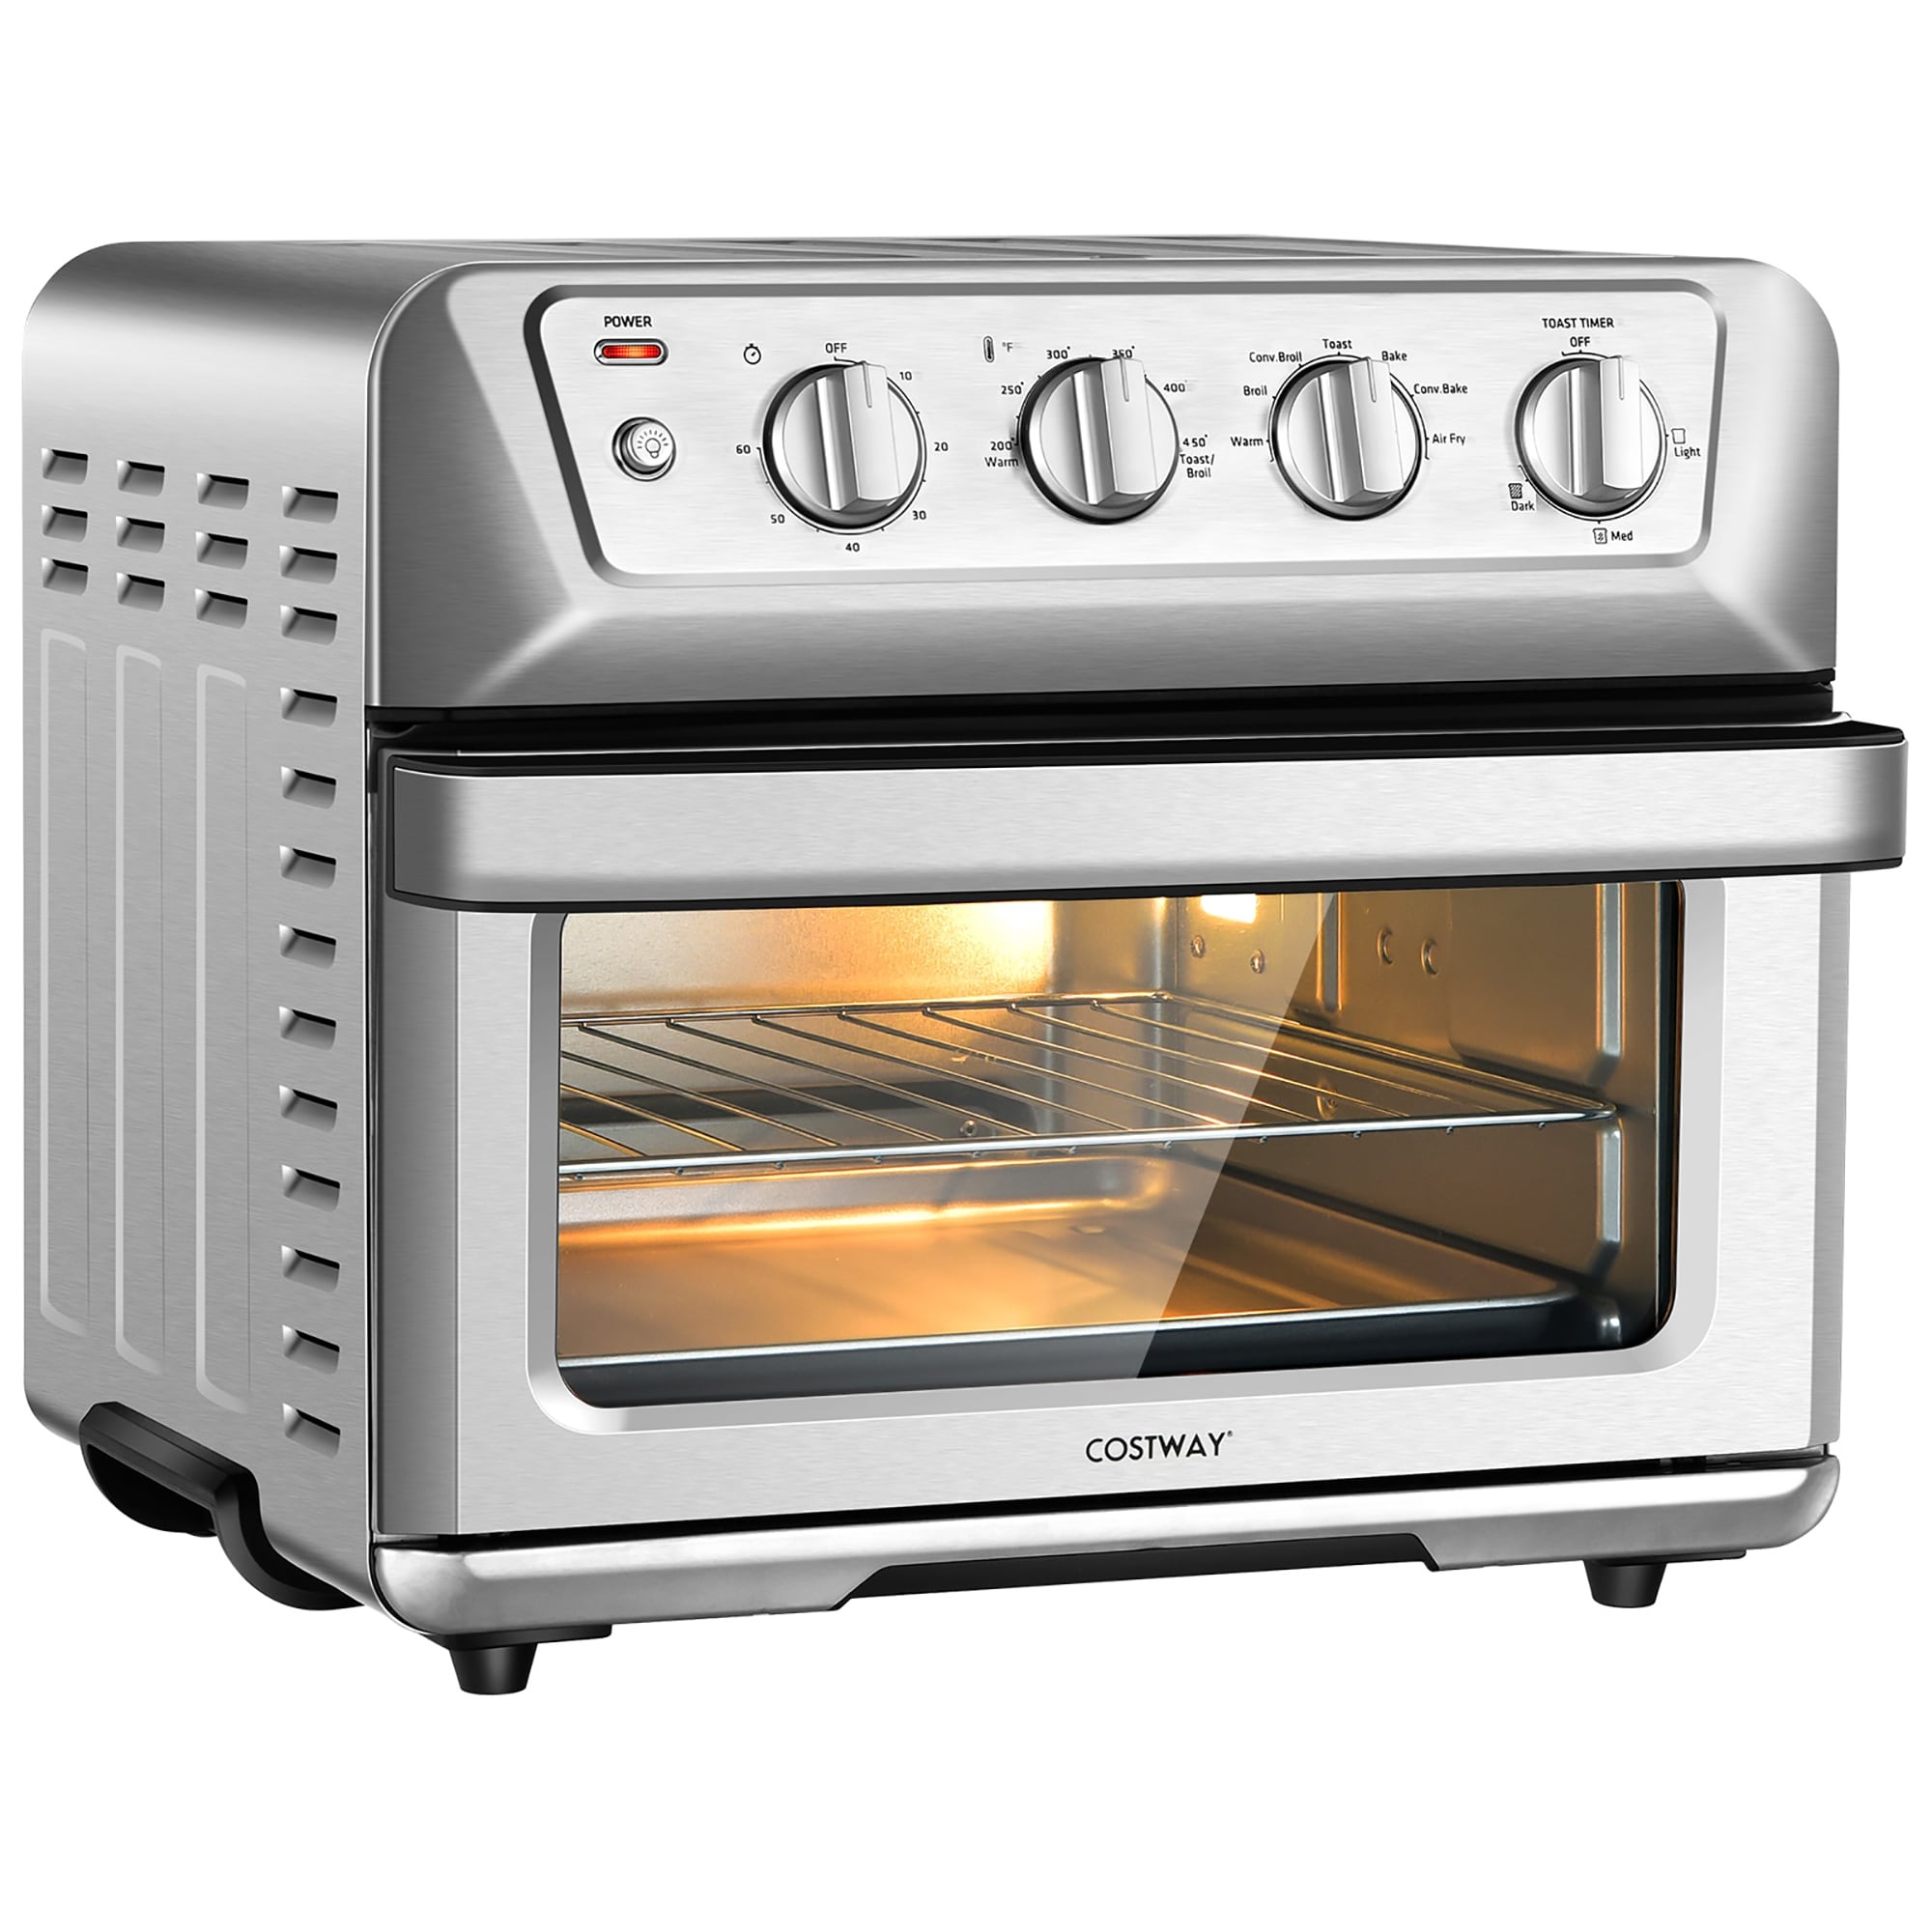 18-Quart Cuisinart 1800W Stainless Steel Air Fryer Toaster Oven